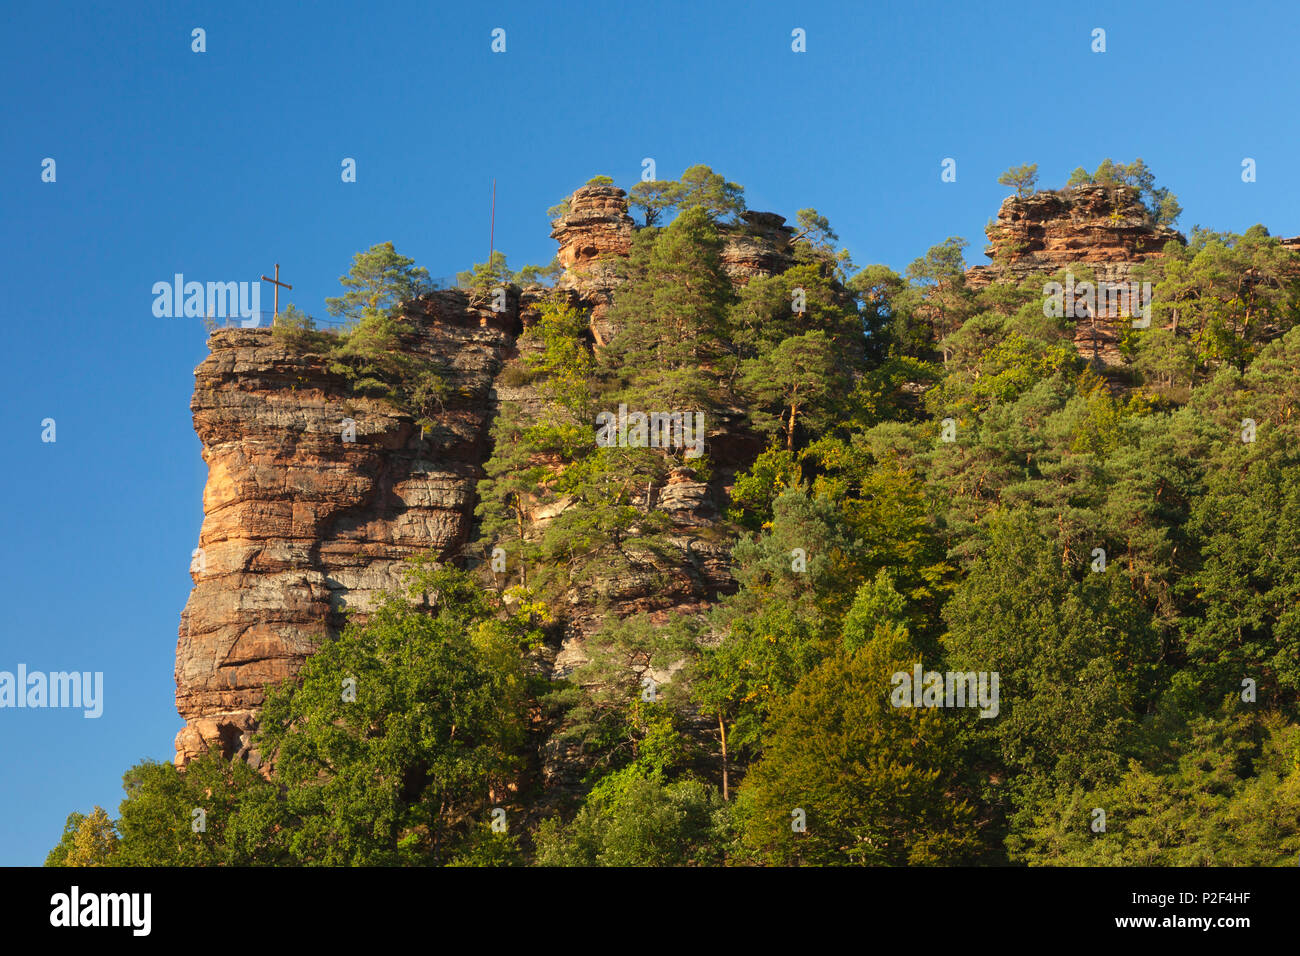 Jungfernsprung rock, near Dahn, Dahner Felsenland, Palatinate Forest nature park, Rhineland-Palatinate, Germany Stock Photo